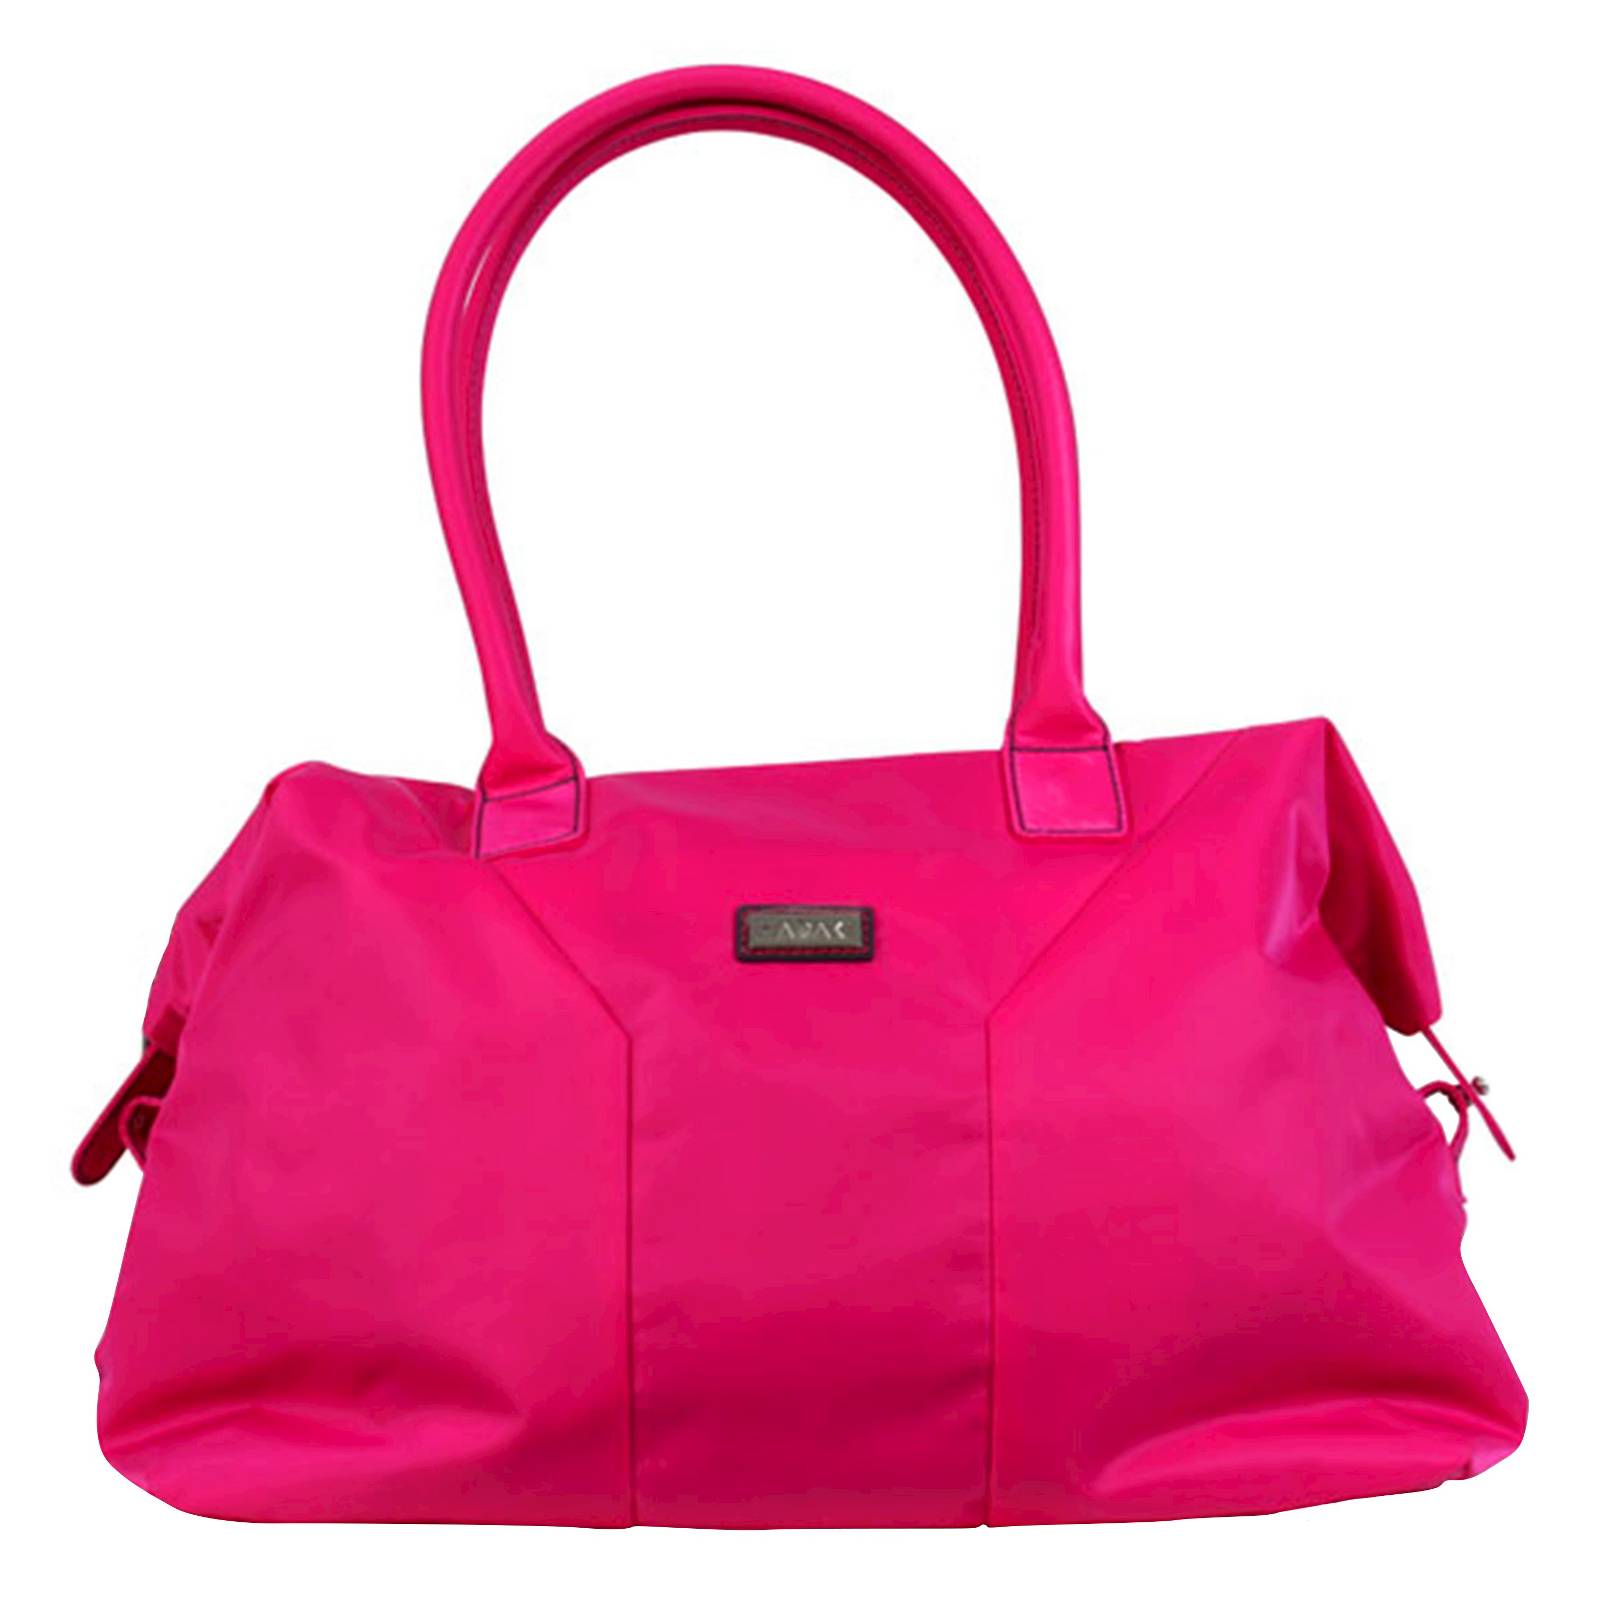 Women's Hadaki Nylon Satchel Handbag | eBay